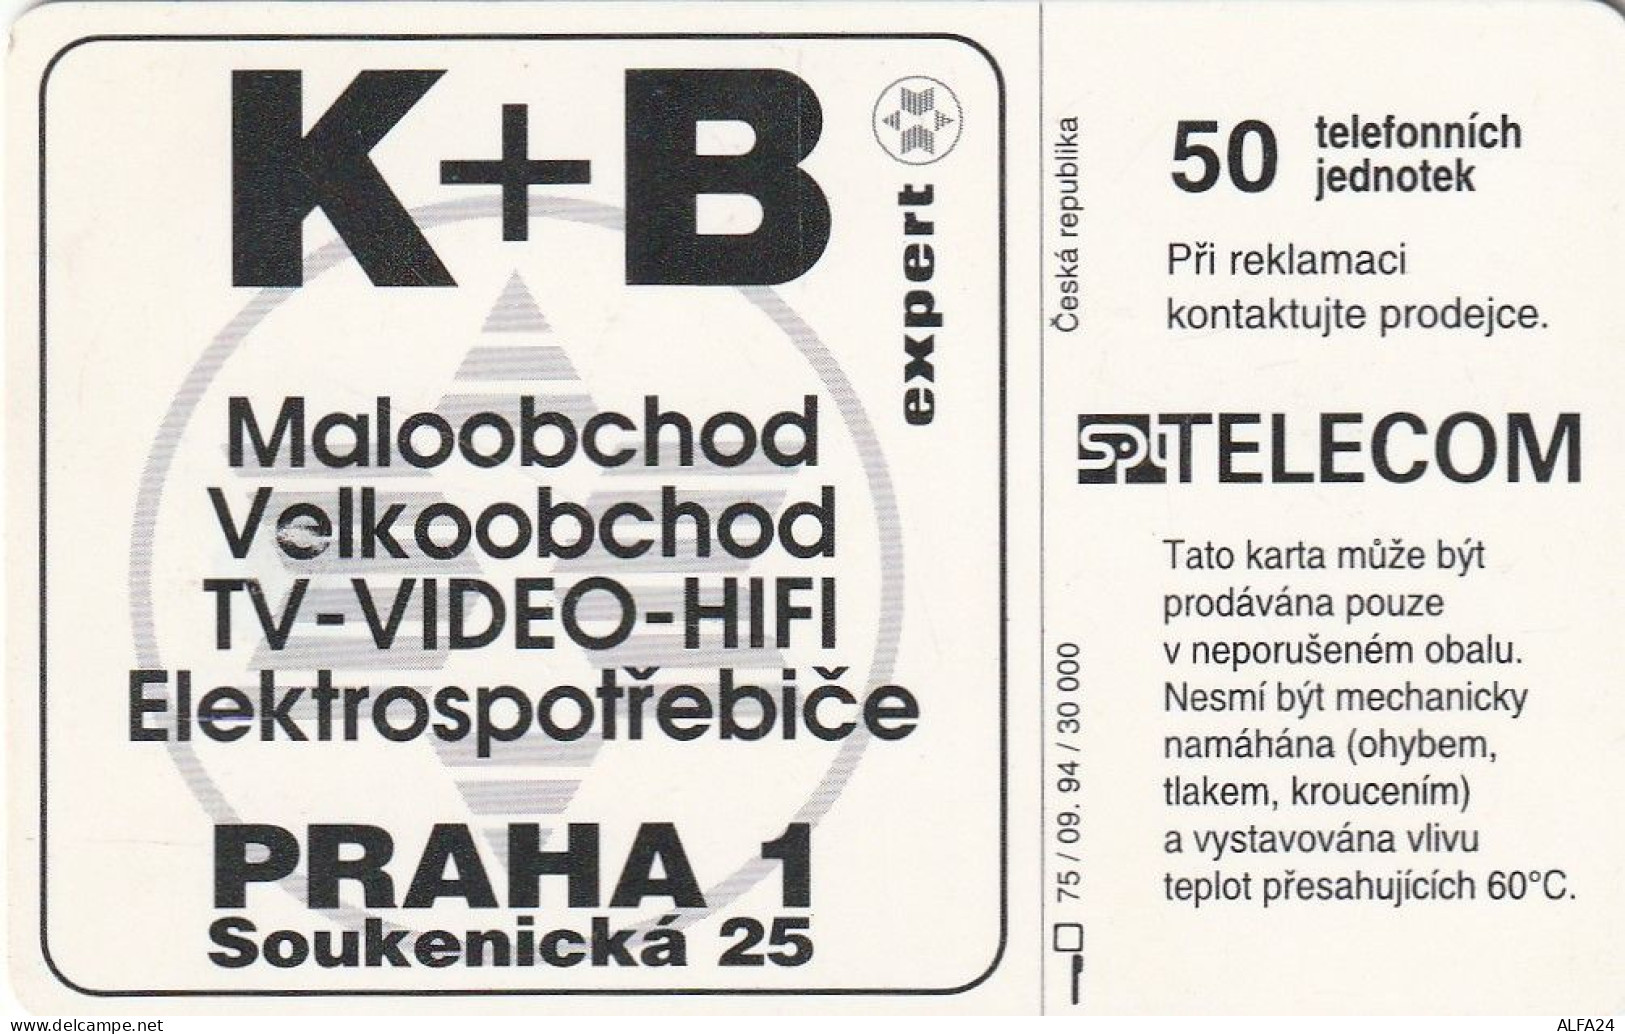 PHONE CARD REP.CECA  (CZ1153 - Tsjechië